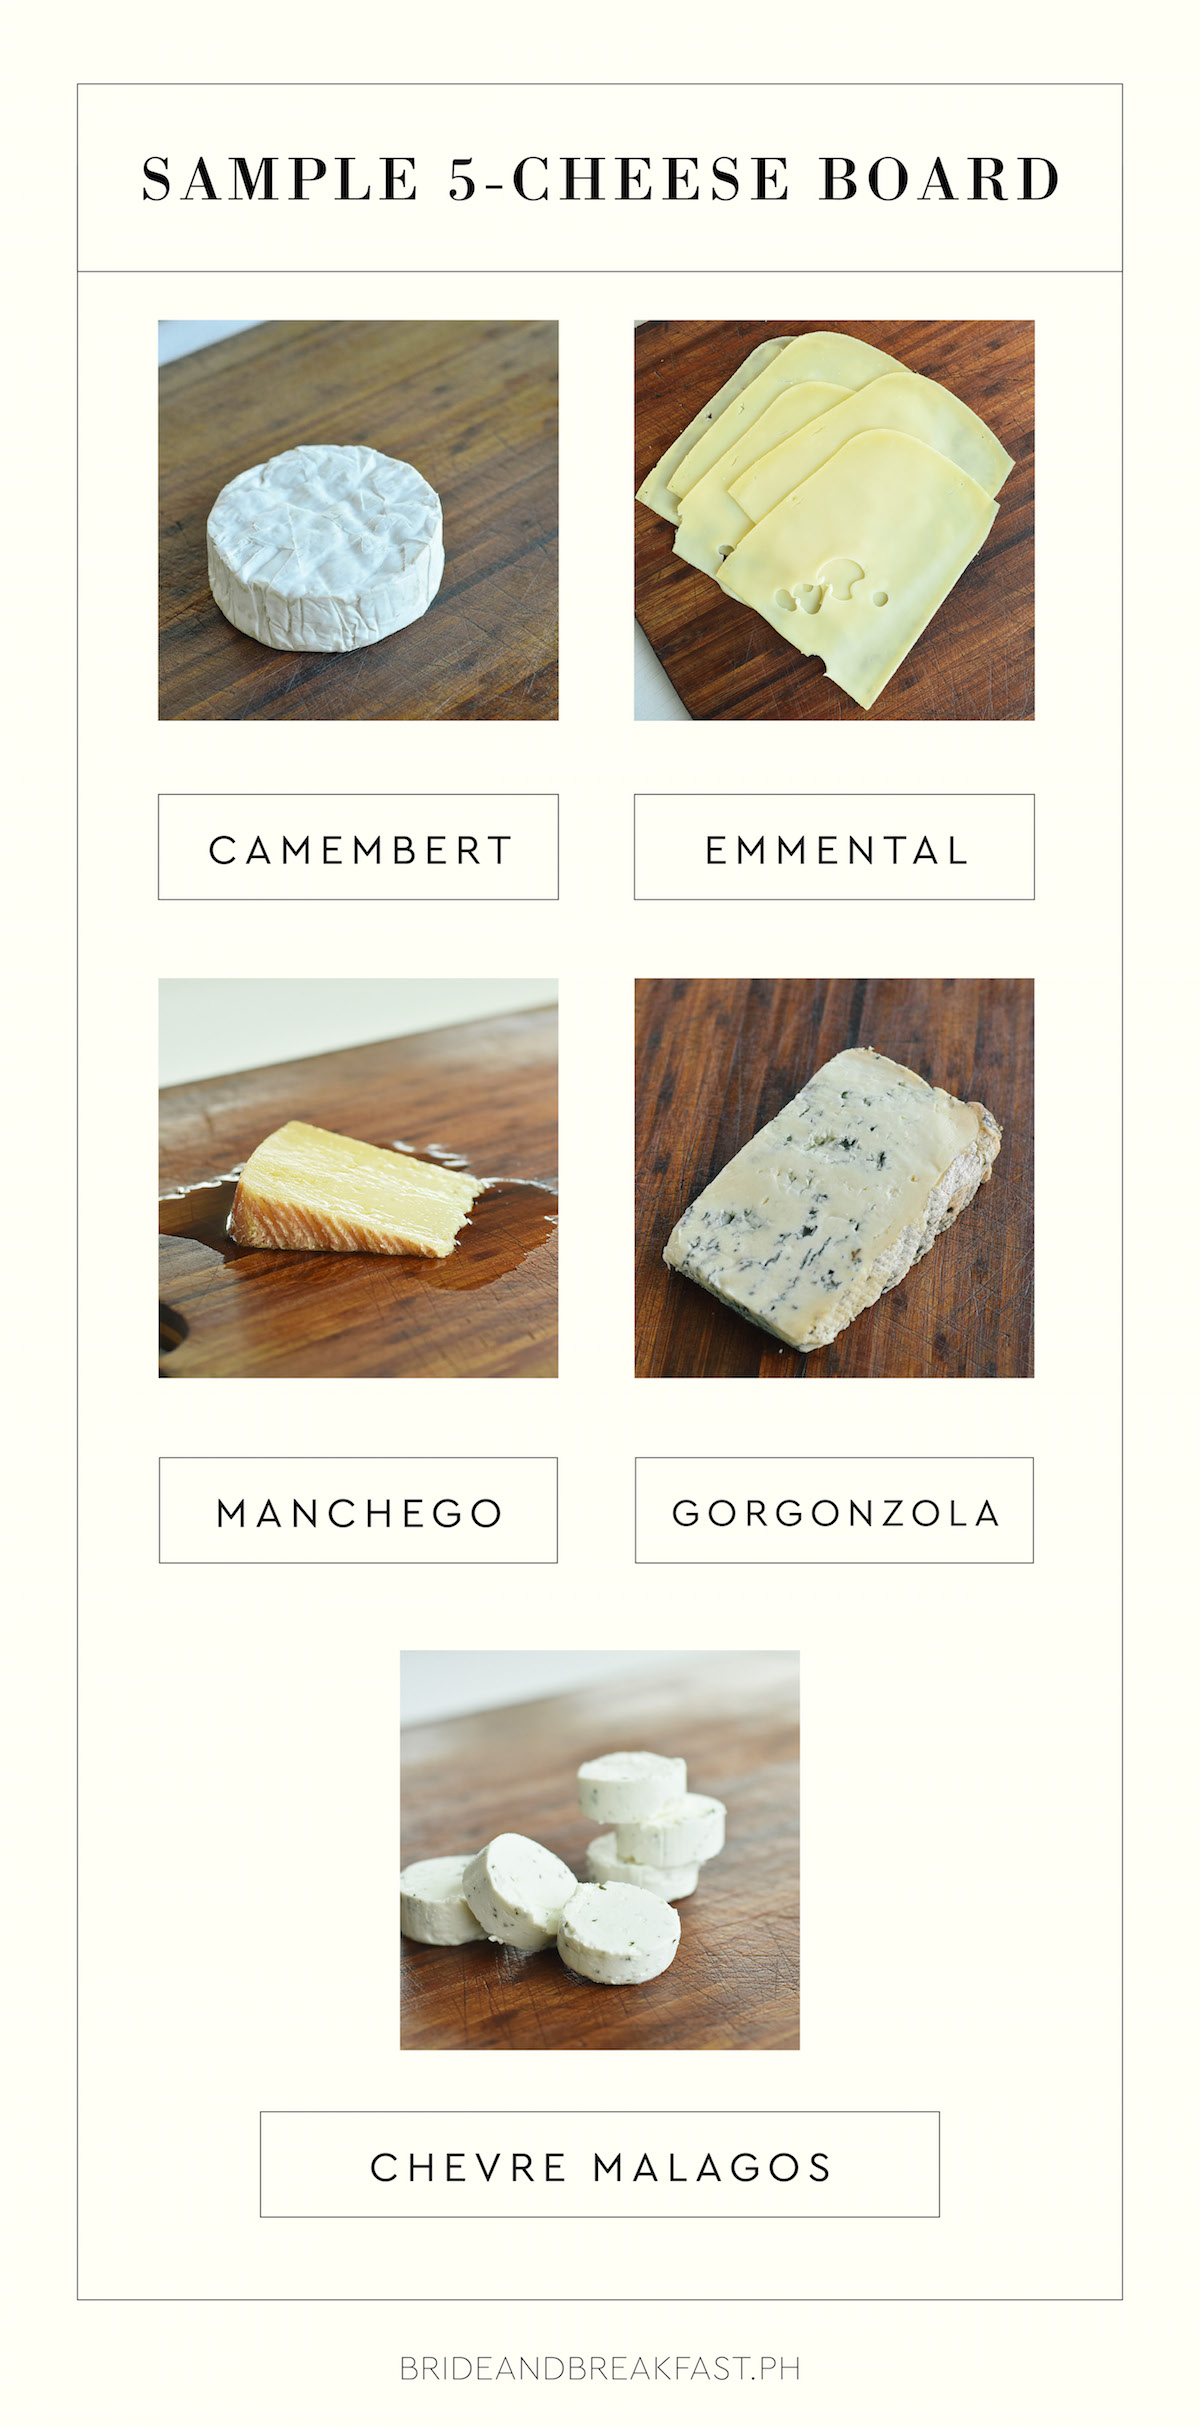 Sample 5-Cheese Board Camembert Emmental Manchego Gorgonzola Chevre Malagos